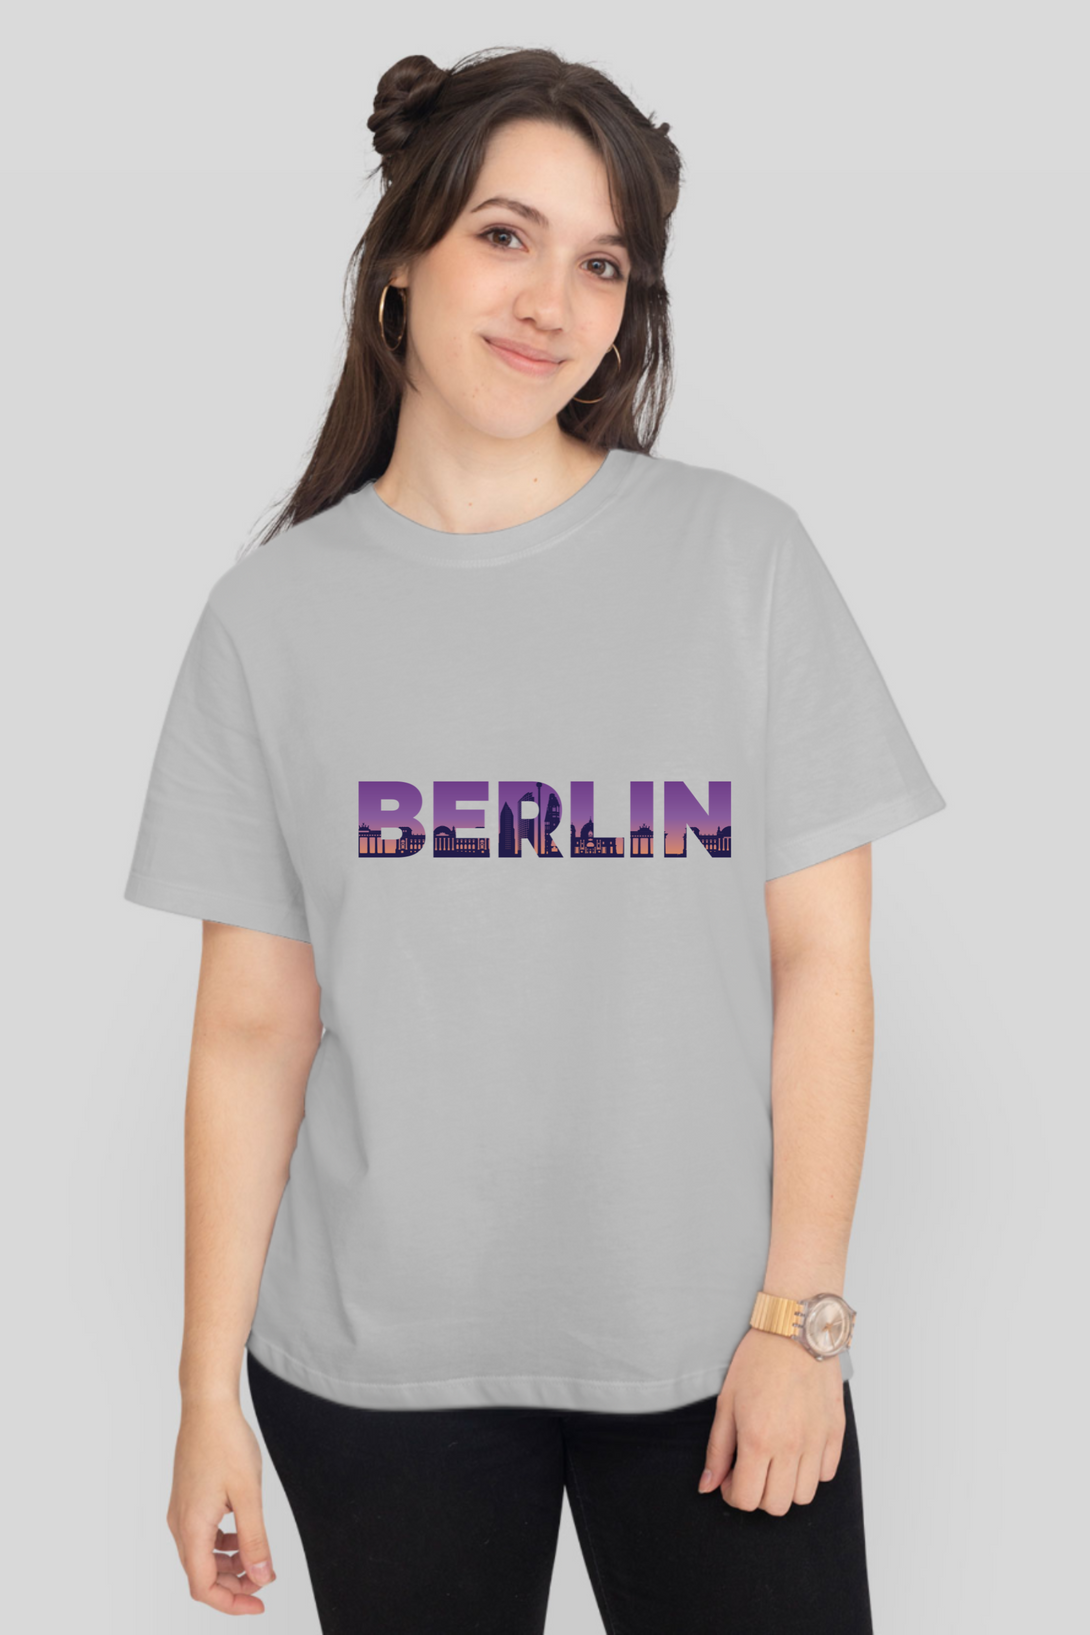 Berlin Skyline Printed T-Shirt For Women - WowWaves - 11